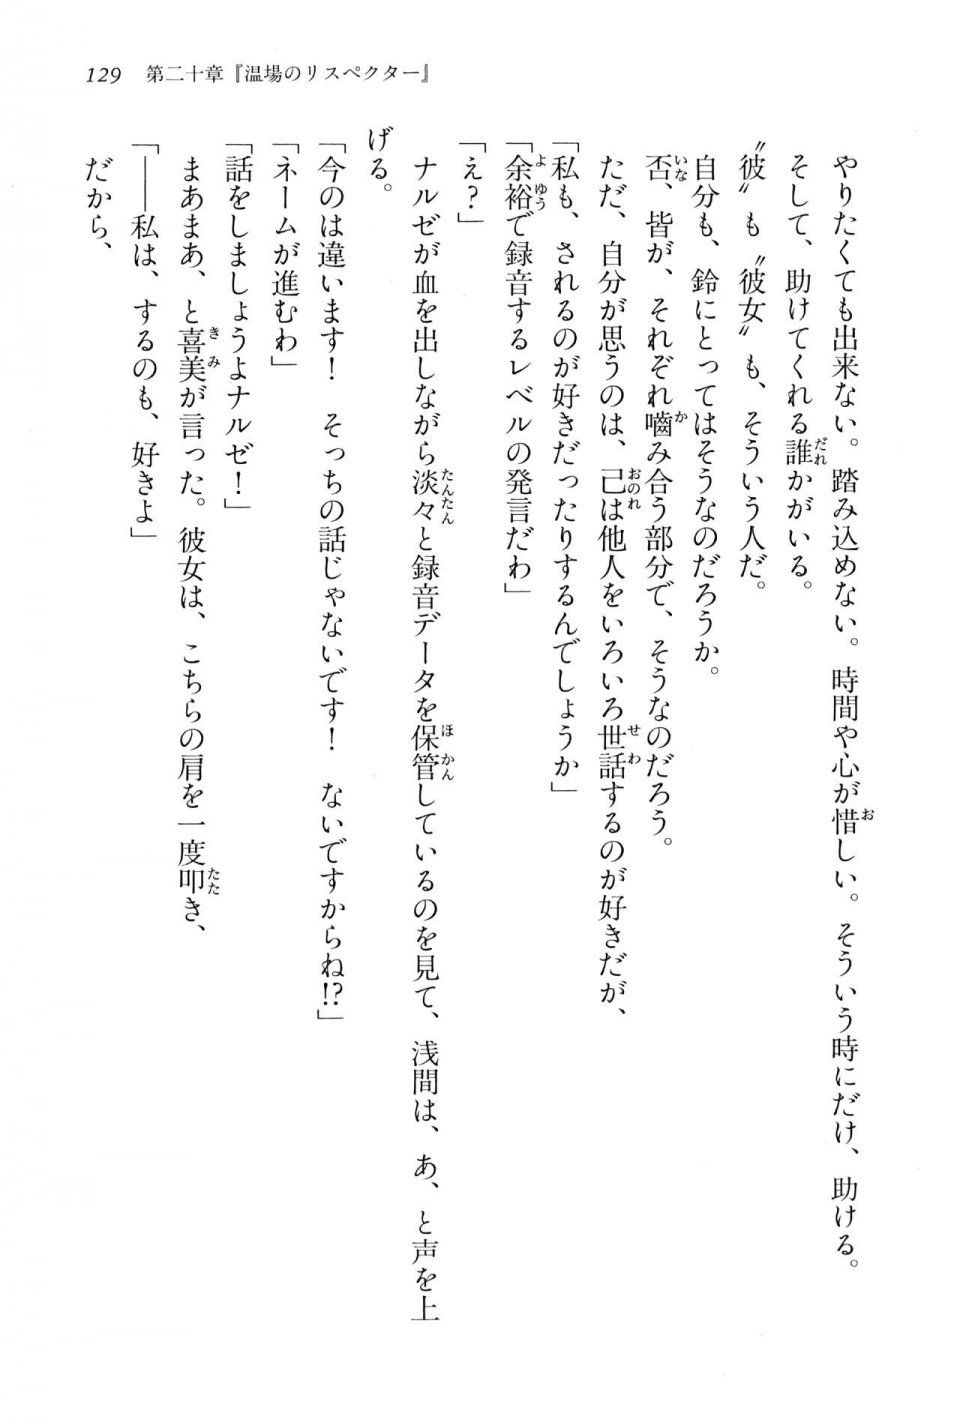 Kyoukai Senjou no Horizon BD Special Mininovel Vol 4(2B) - Photo #133